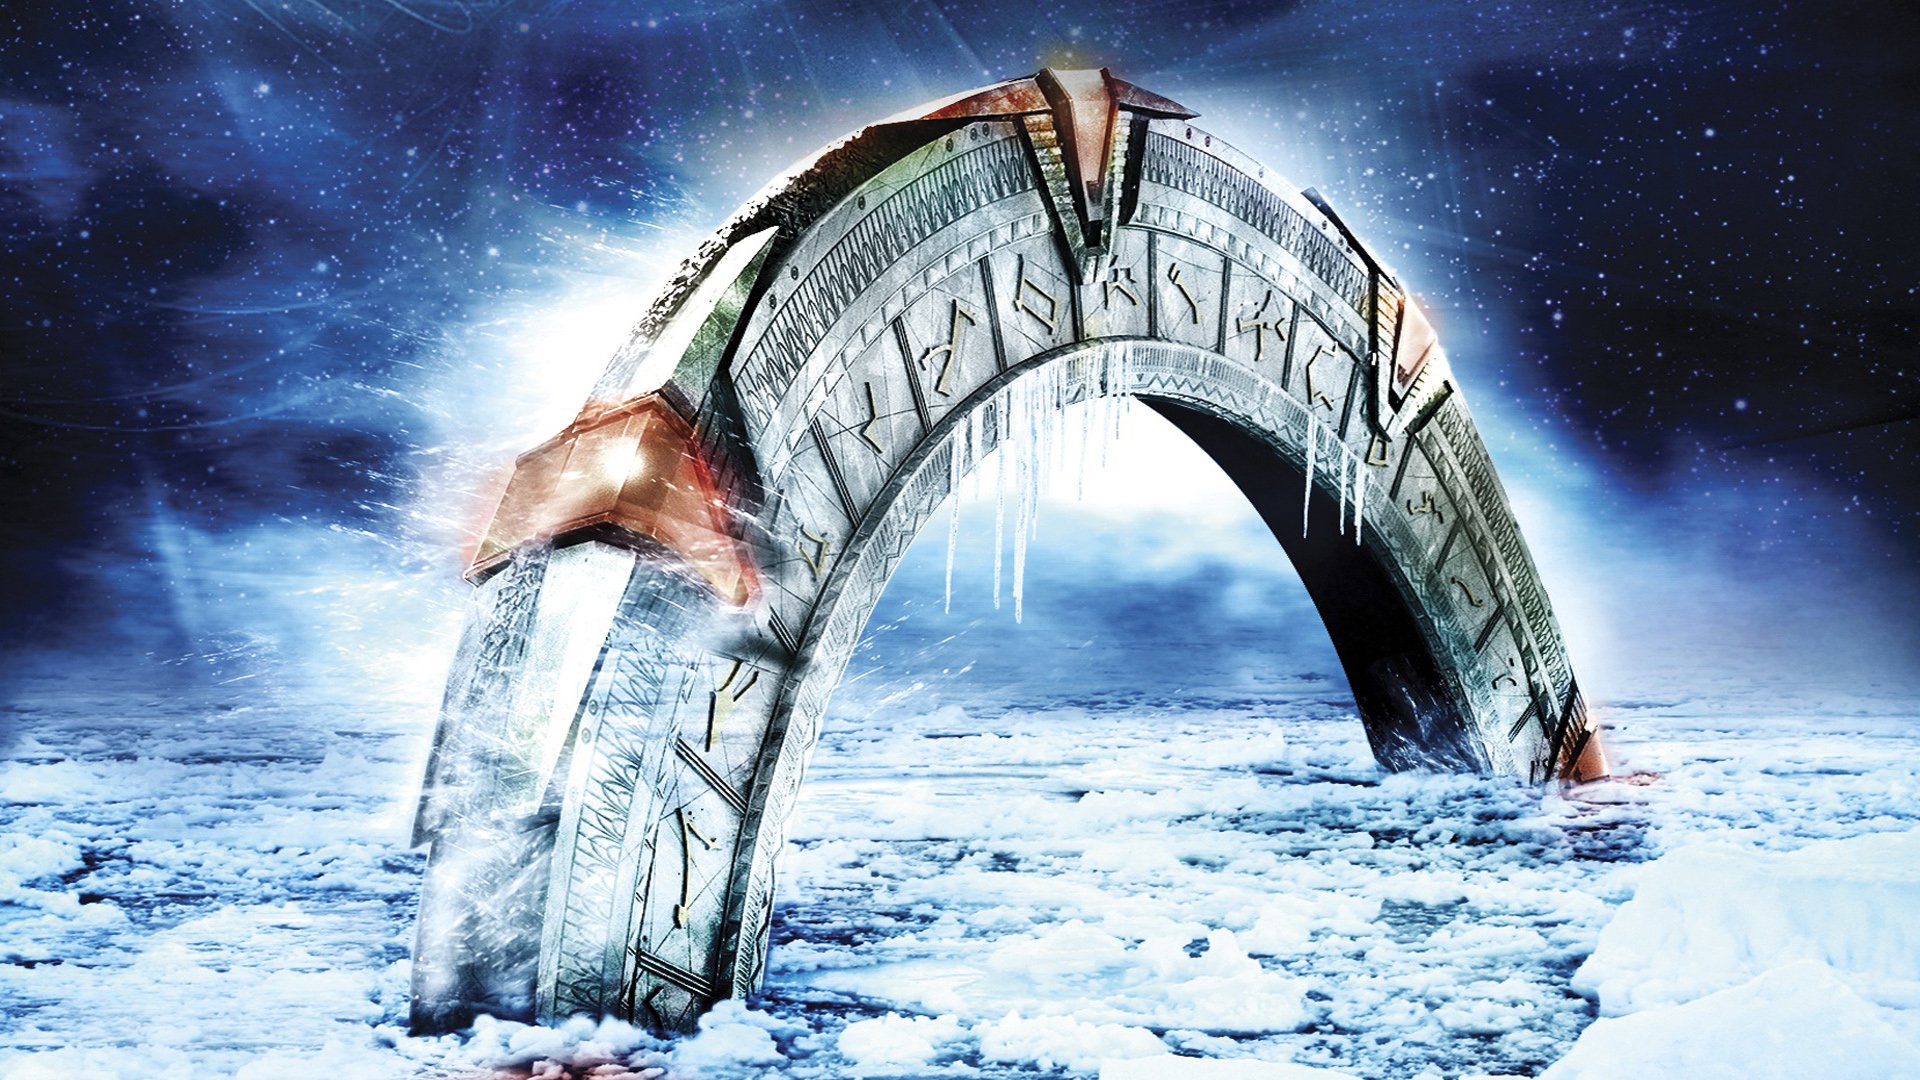 1920x1080 Stargate: Continuum Wallpaper Background Image. 